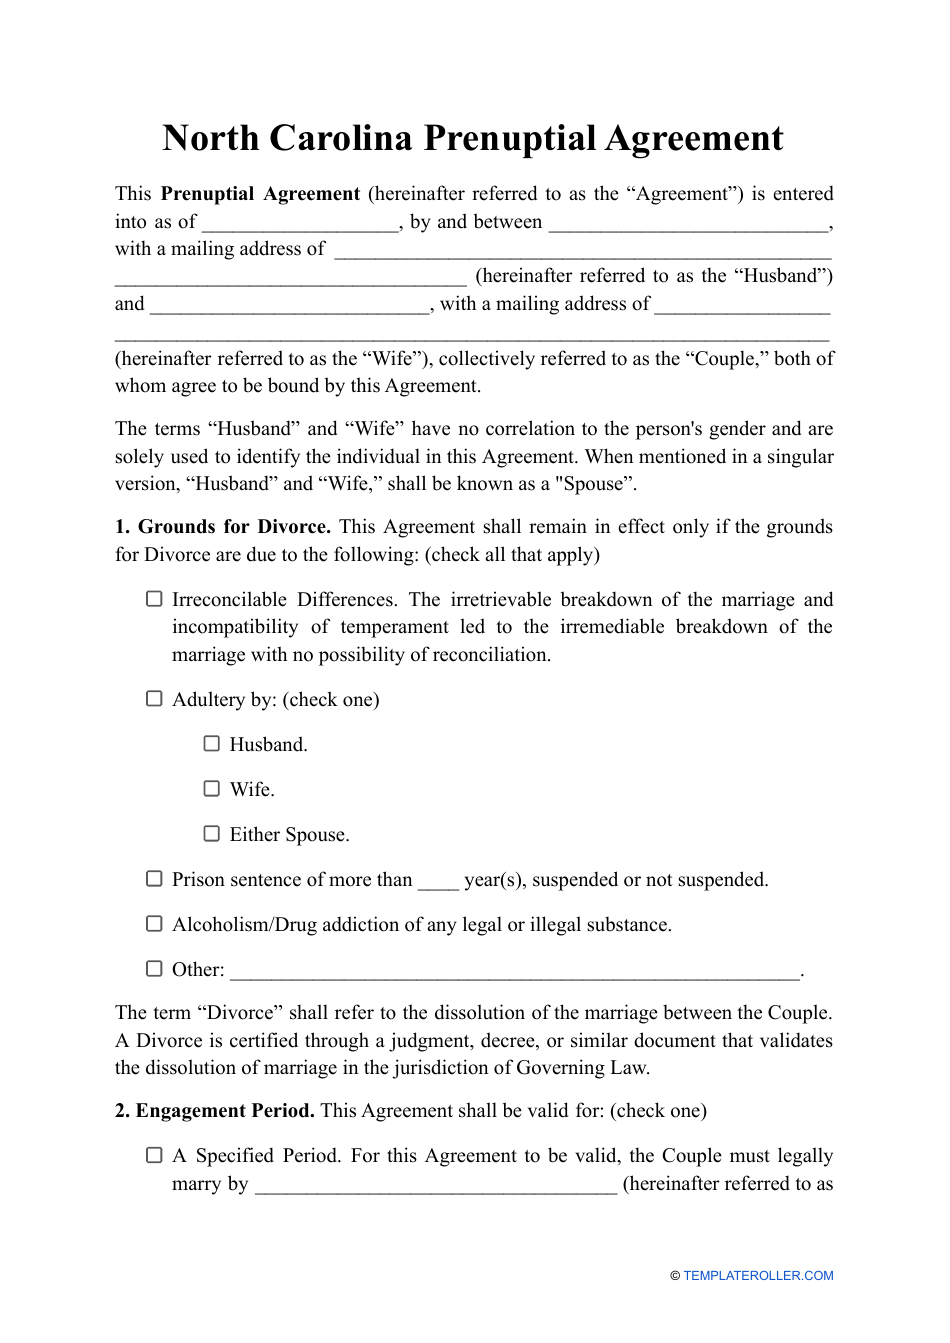 Prenuptial Agreement Template - North Carolina, Page 1